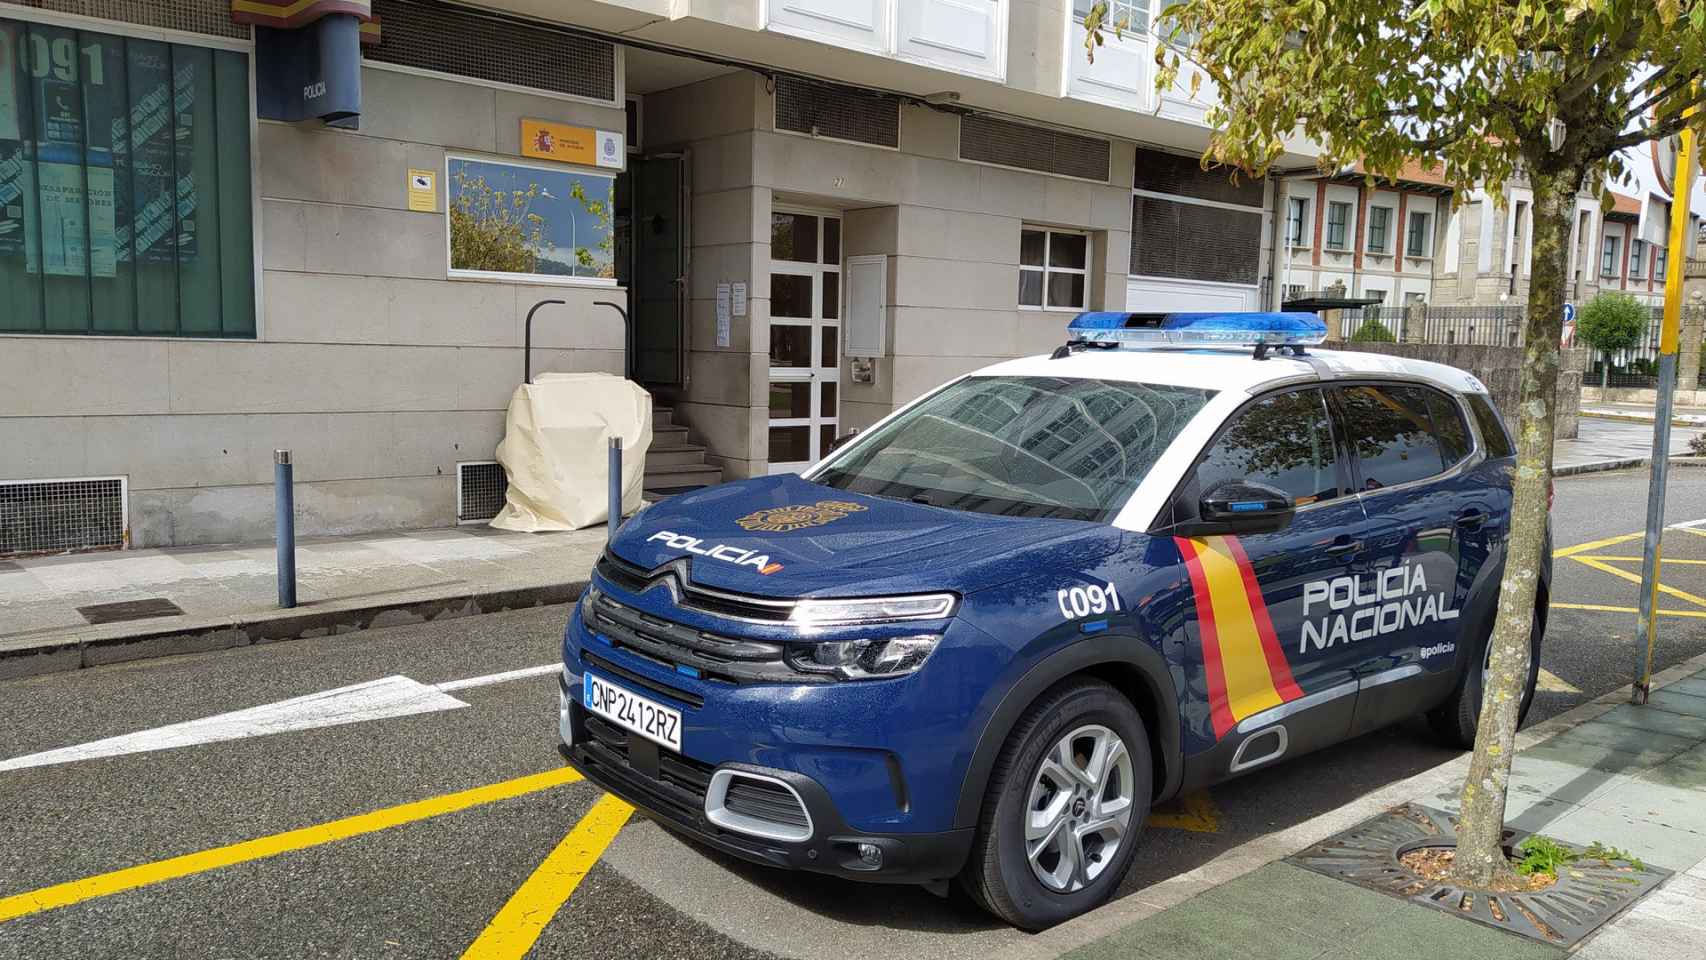 Comisaría de Policía Nacional de Marín (Pontevedra).